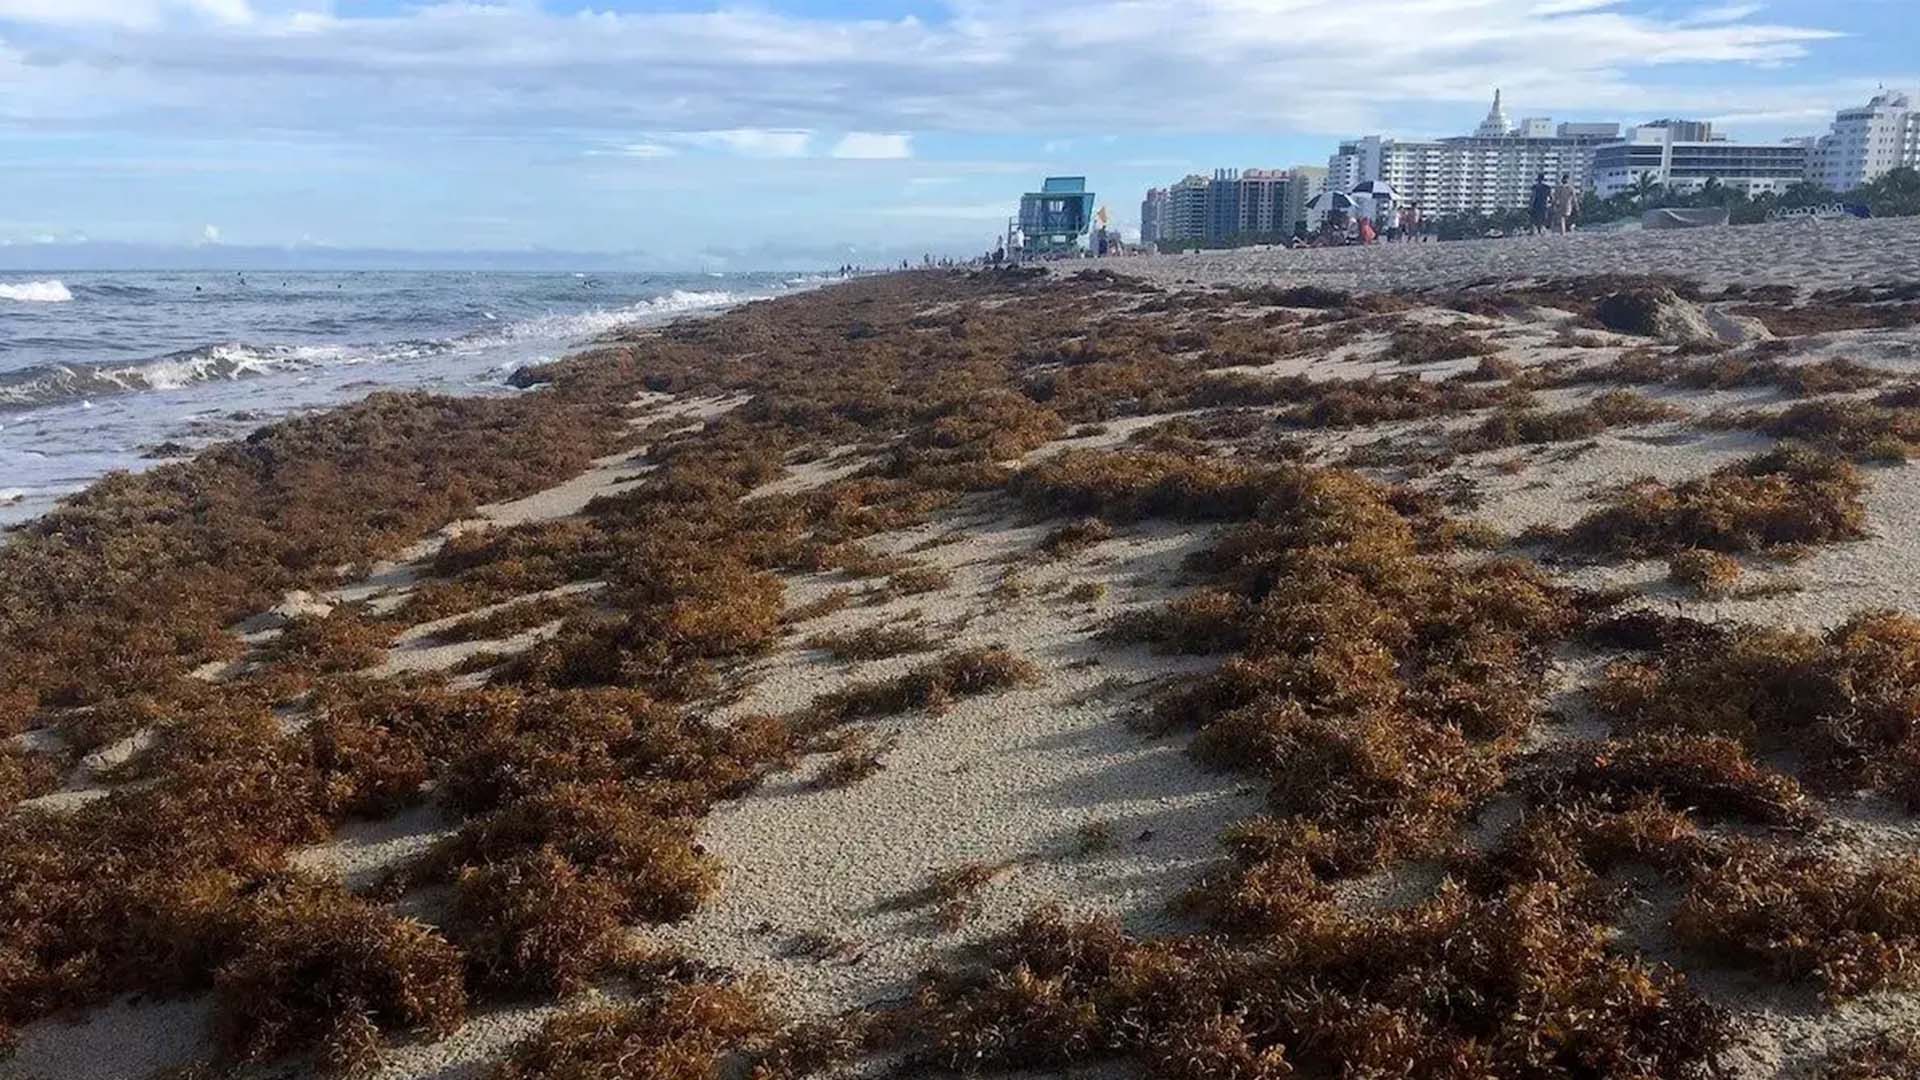 Sargassum seaweed on the shore of Miami Beach, Florida in 2019